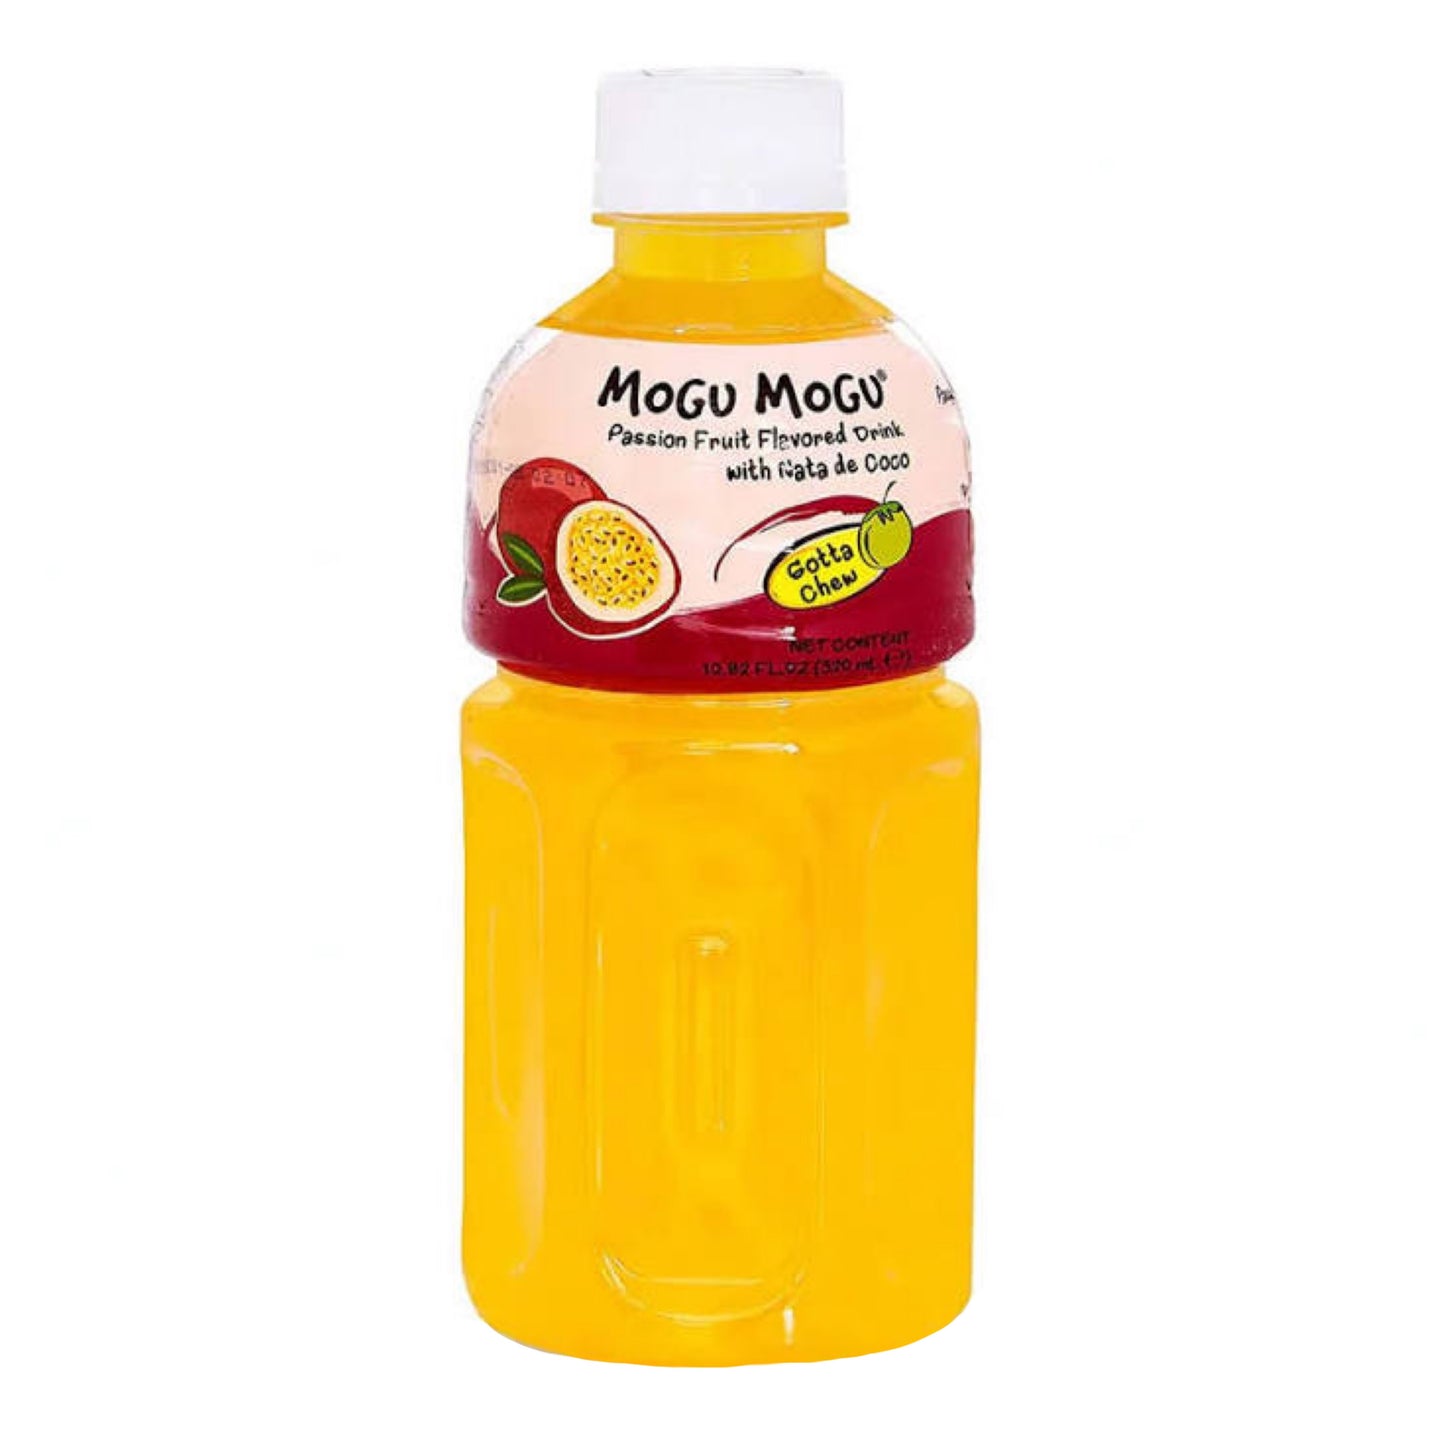 Mogu Mogu passion fruit drink 320ml (Thailand)